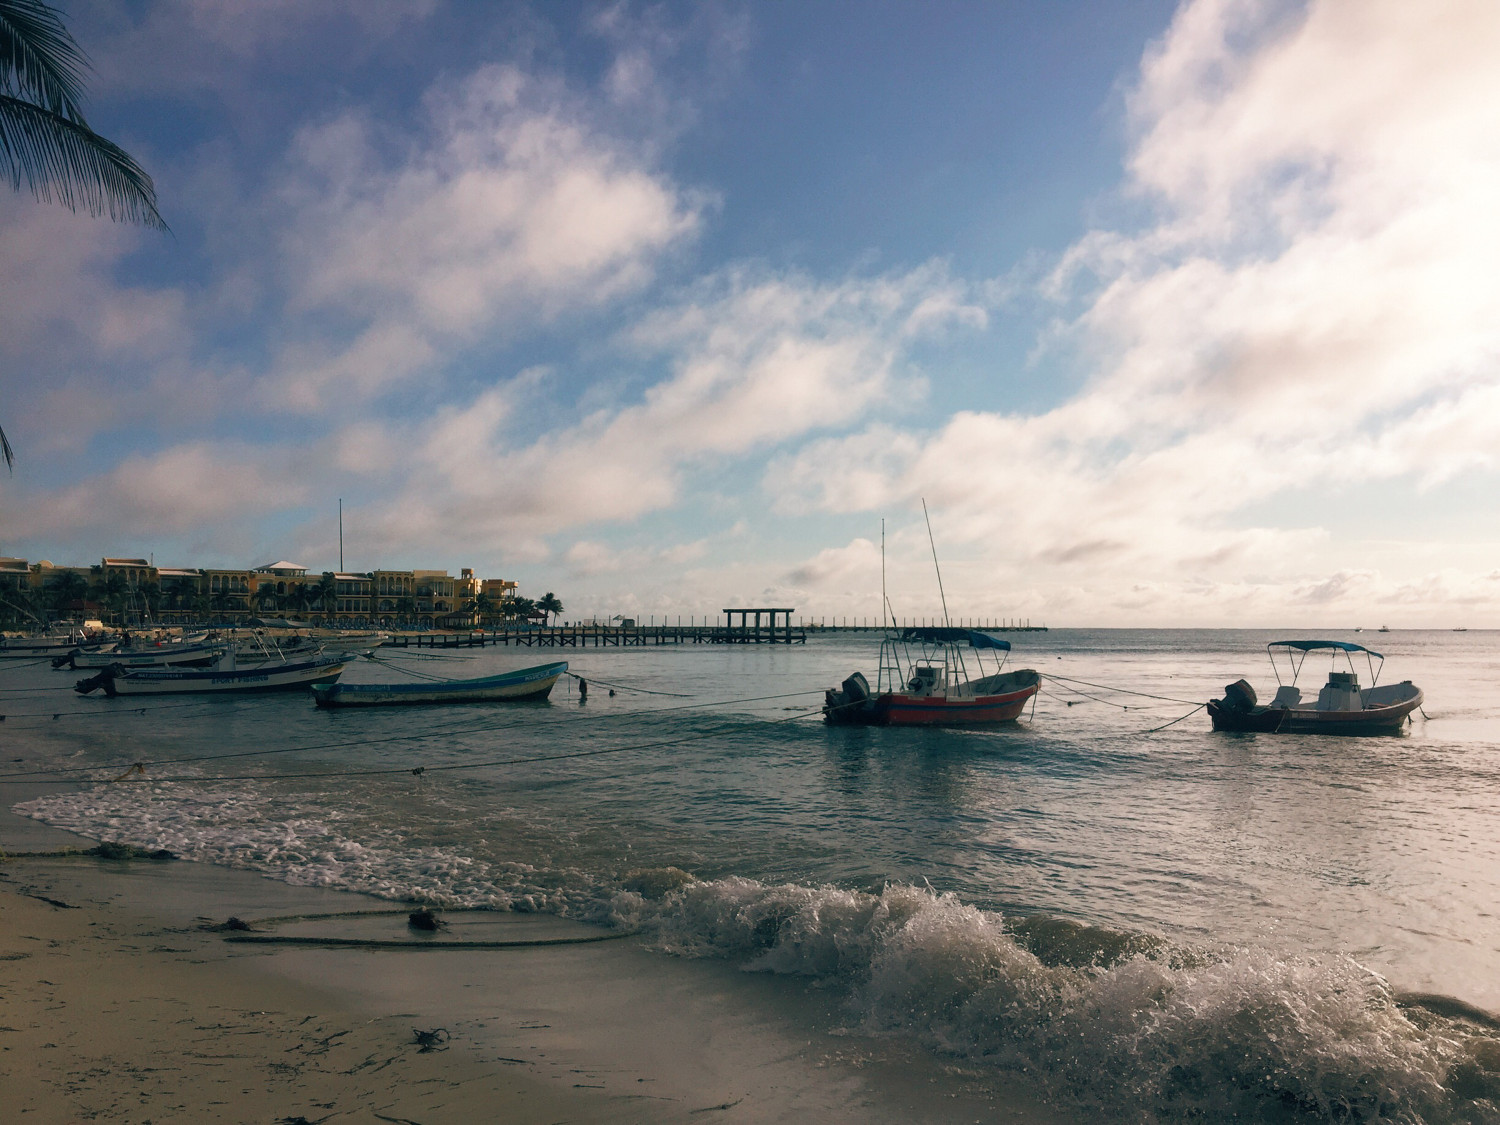 playa-del-carmen-boats-dante-vincent-photography